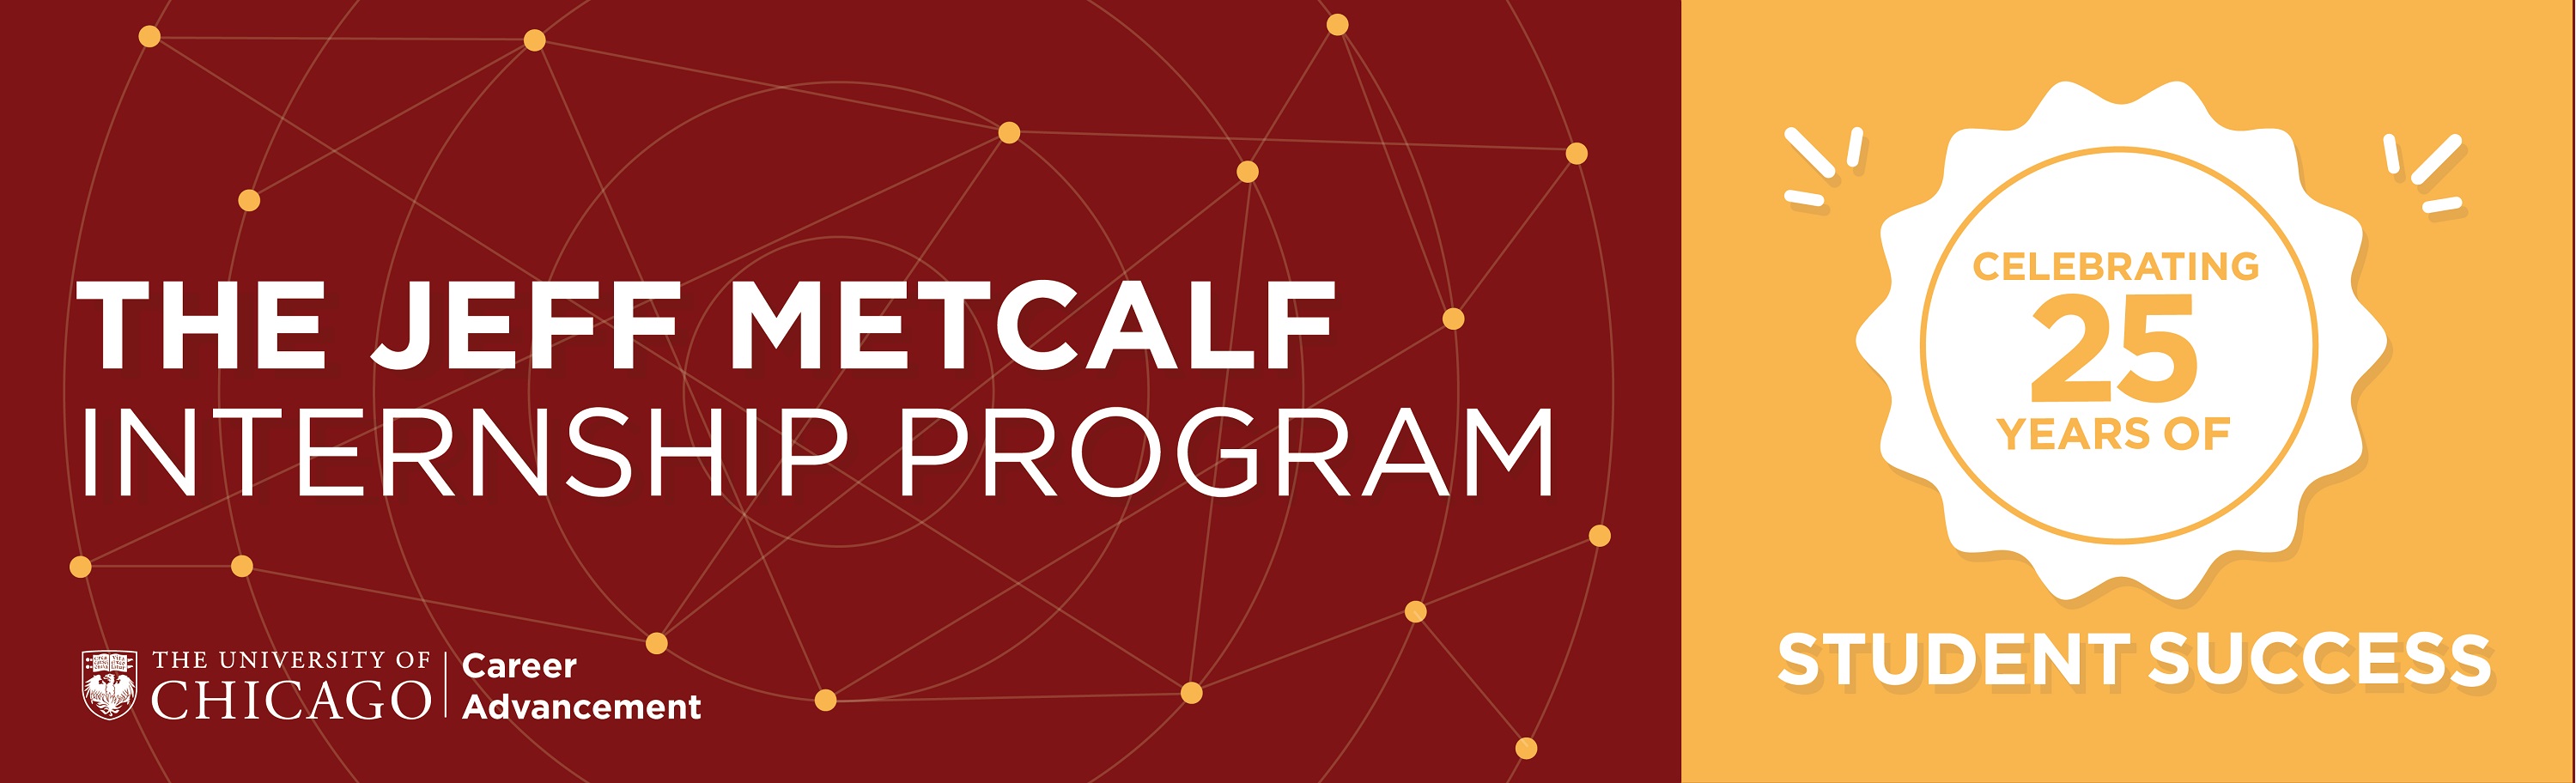 Jeff Metcalf Internship Program 25th Anniversary 